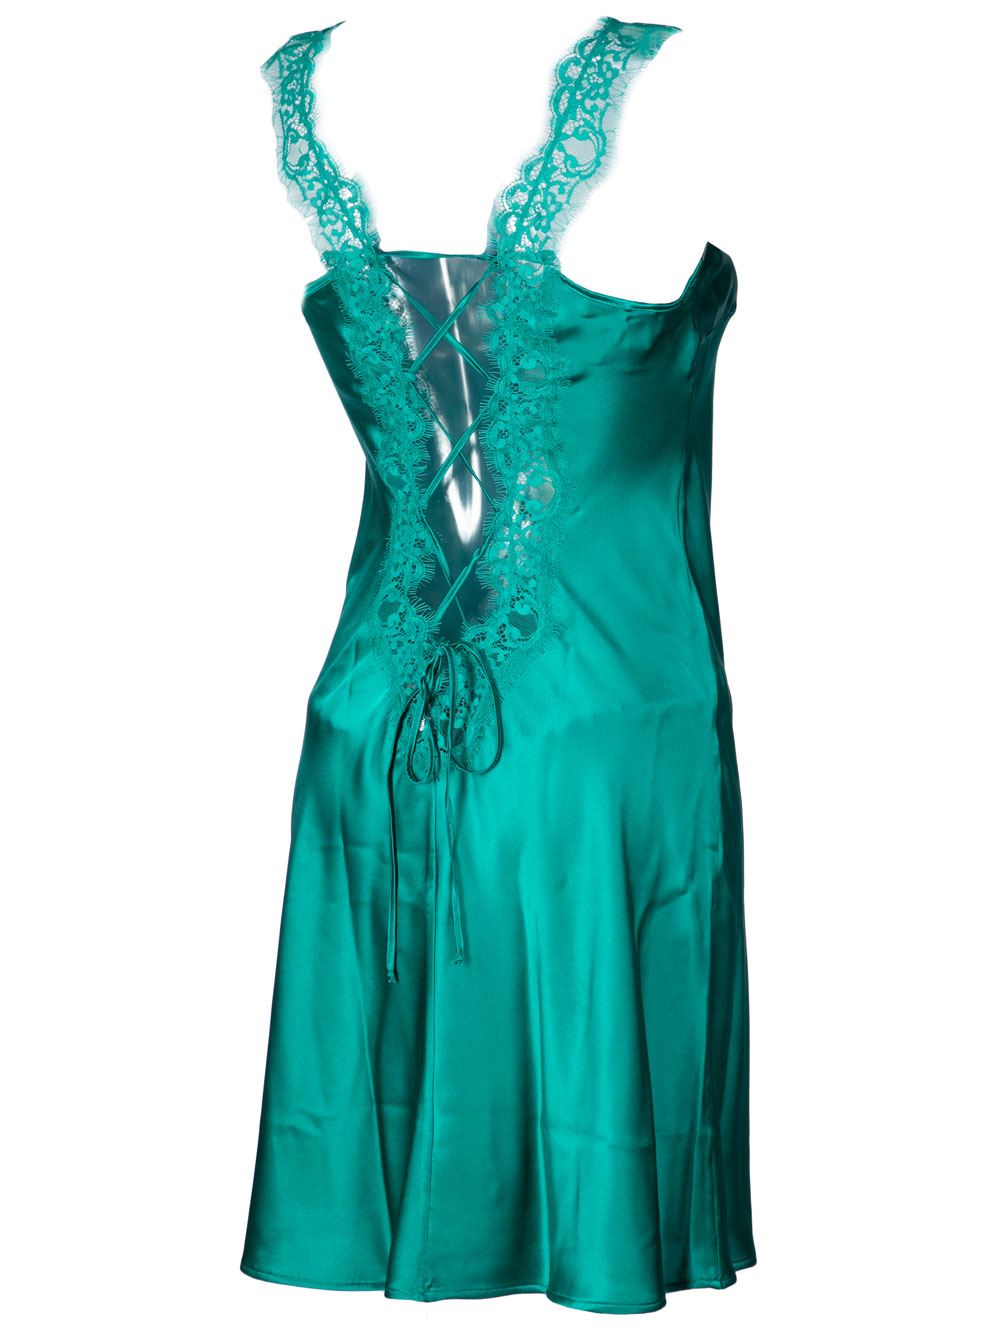 Effetto Seta Donna Maya Verde smeraldo Amazon Moda Donna Abbigliamento Intimo Sottovesti XL Gonna Sottoveste 